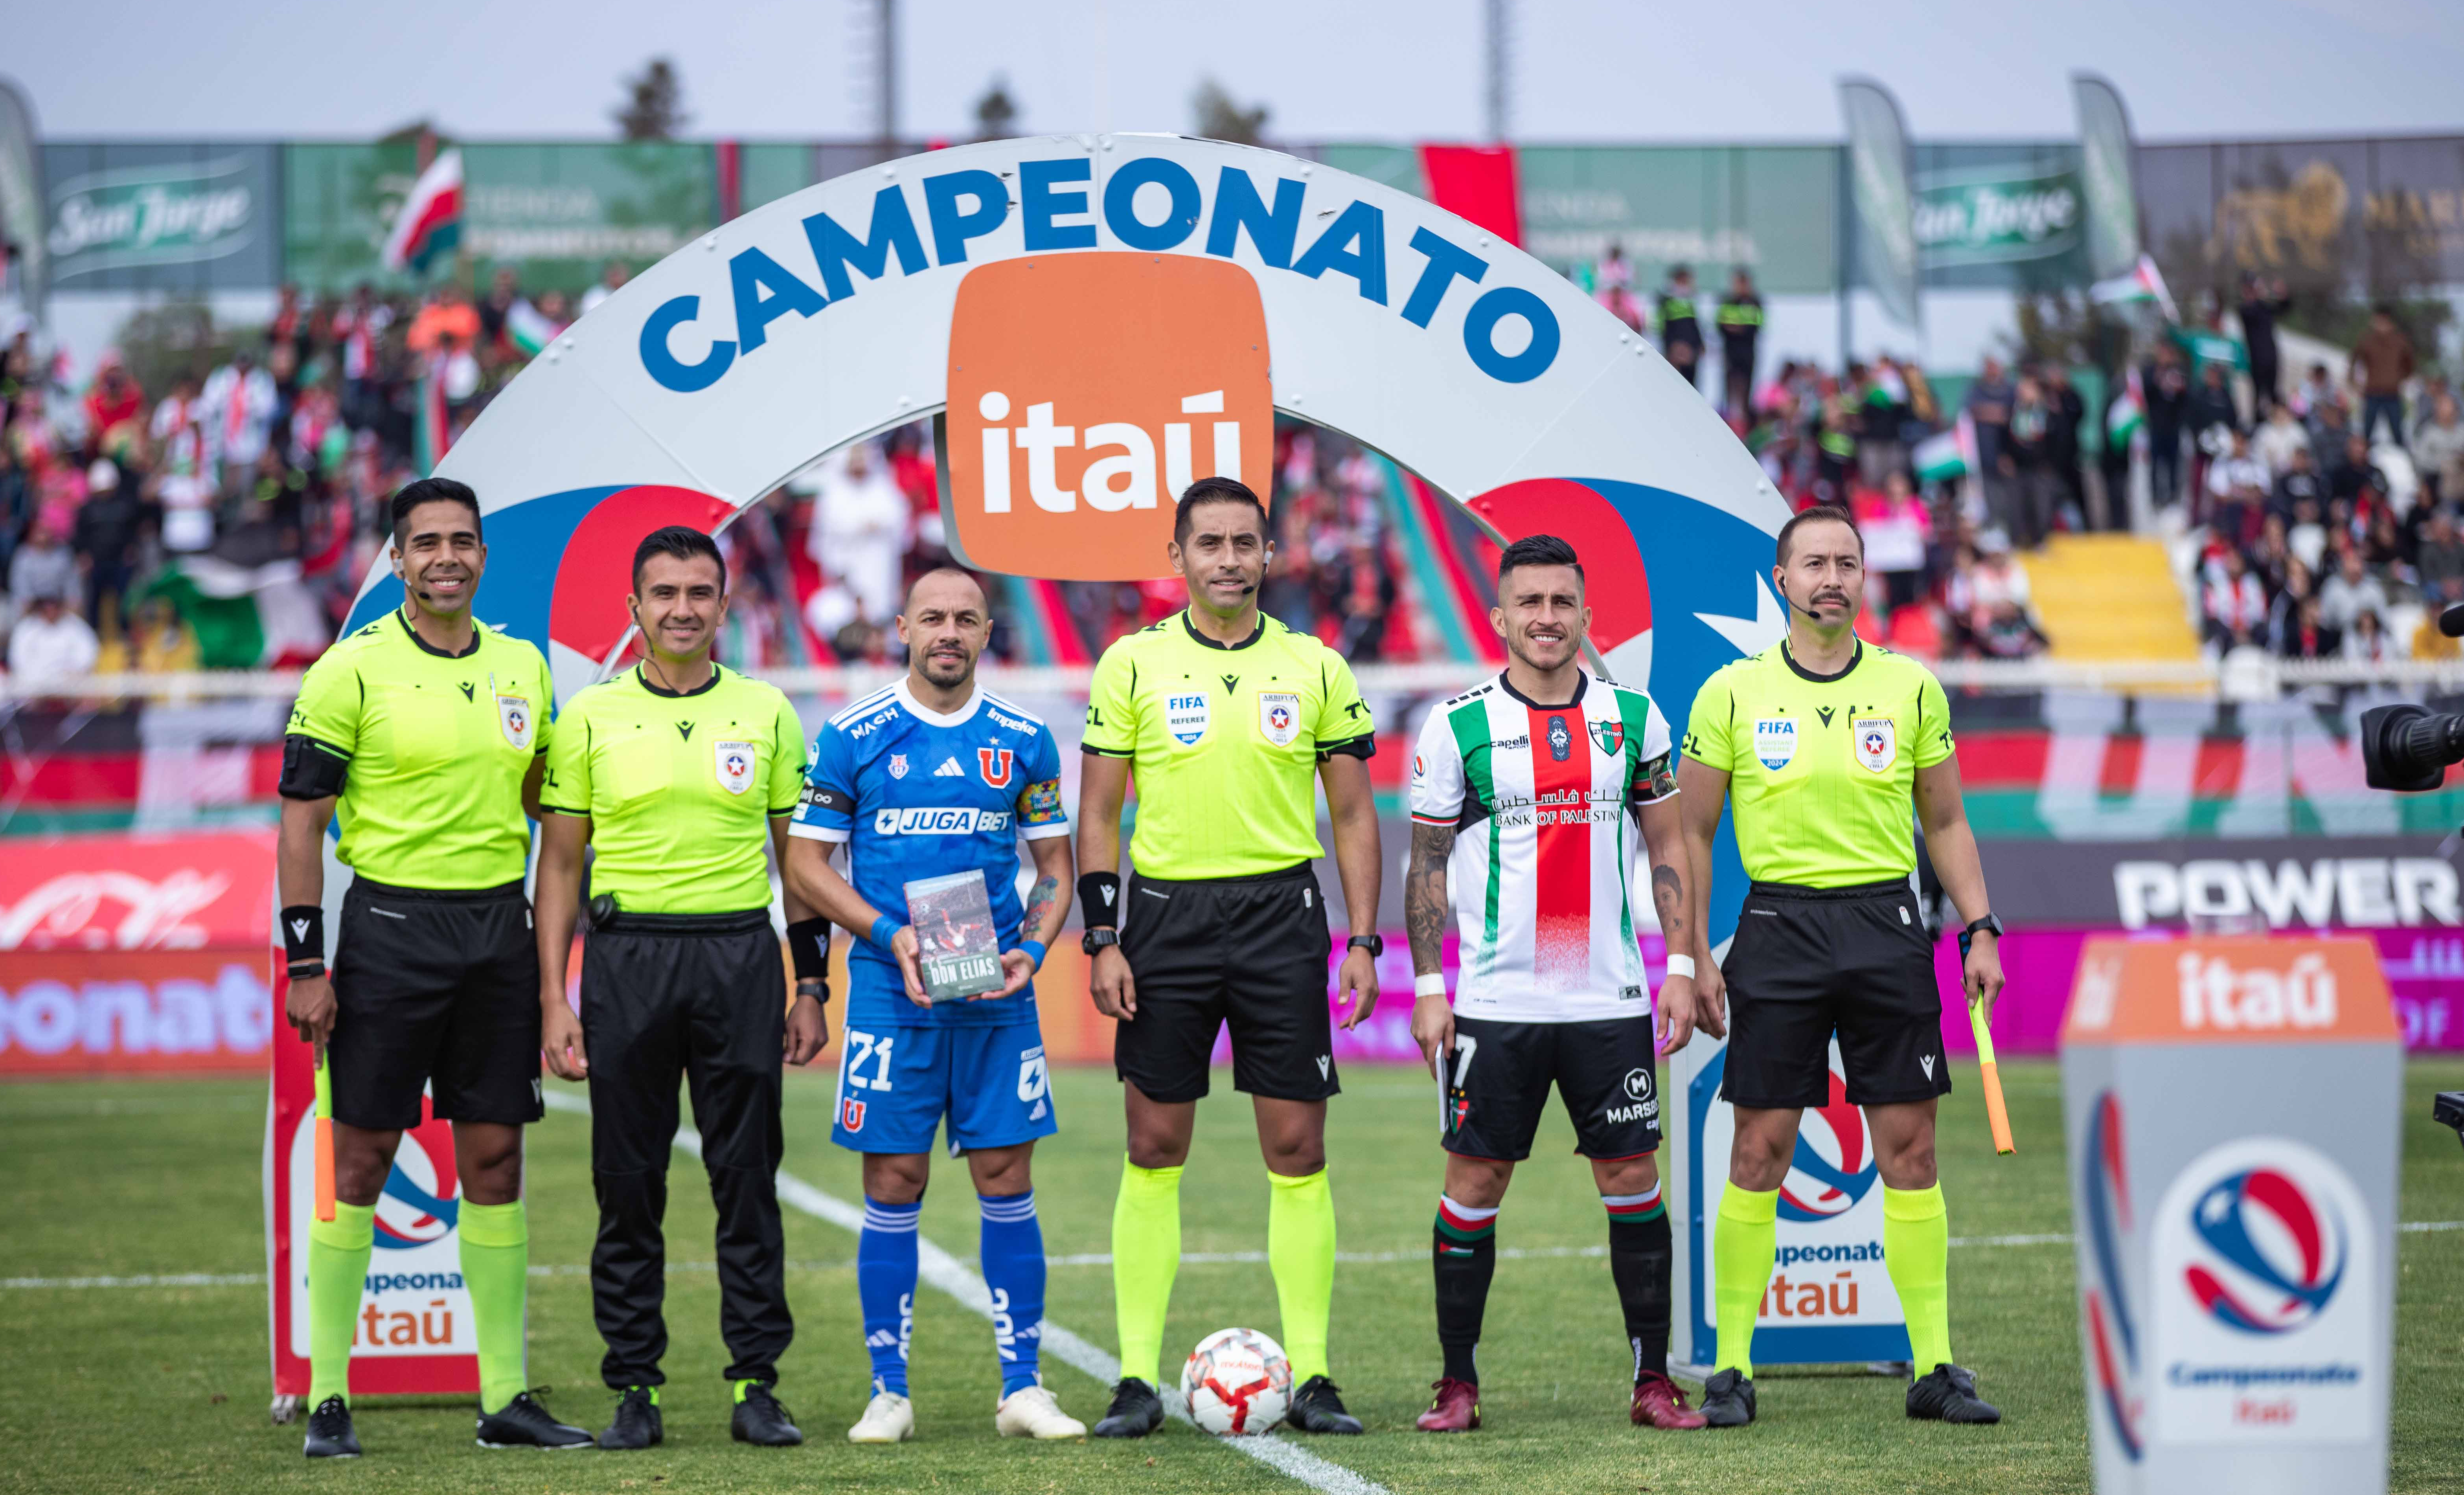 Campeonato Itaú 